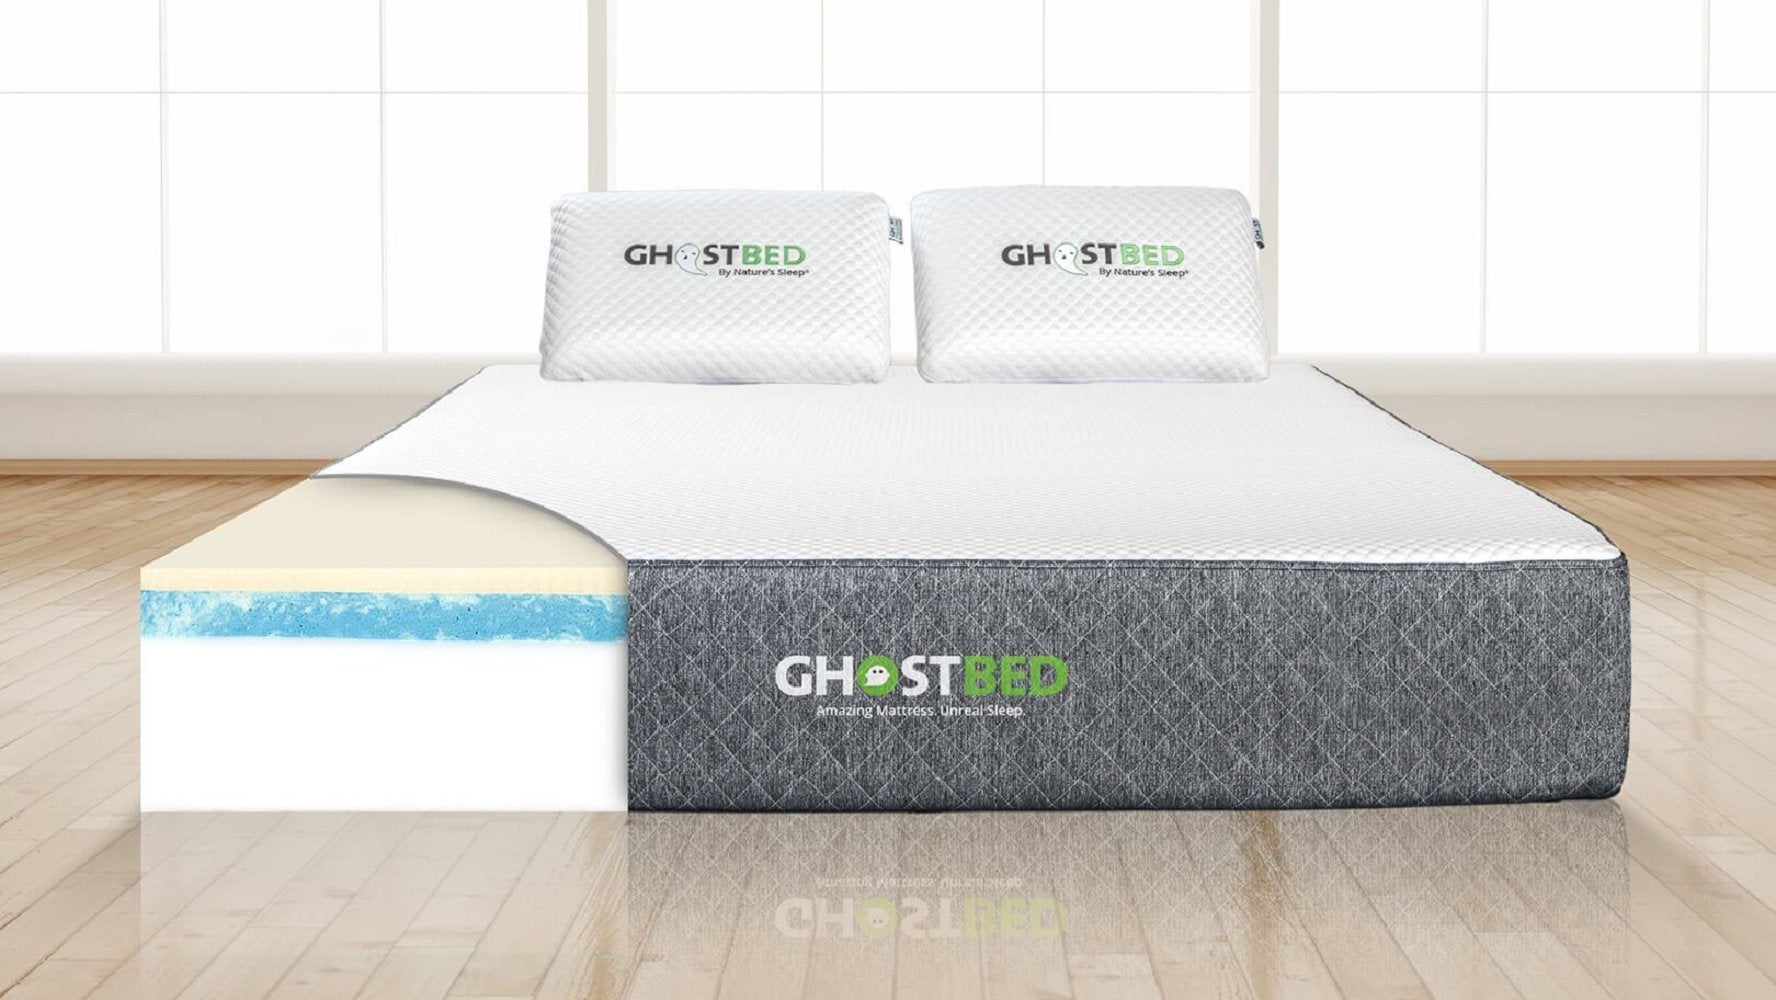 foam mattress softer than ghostbed